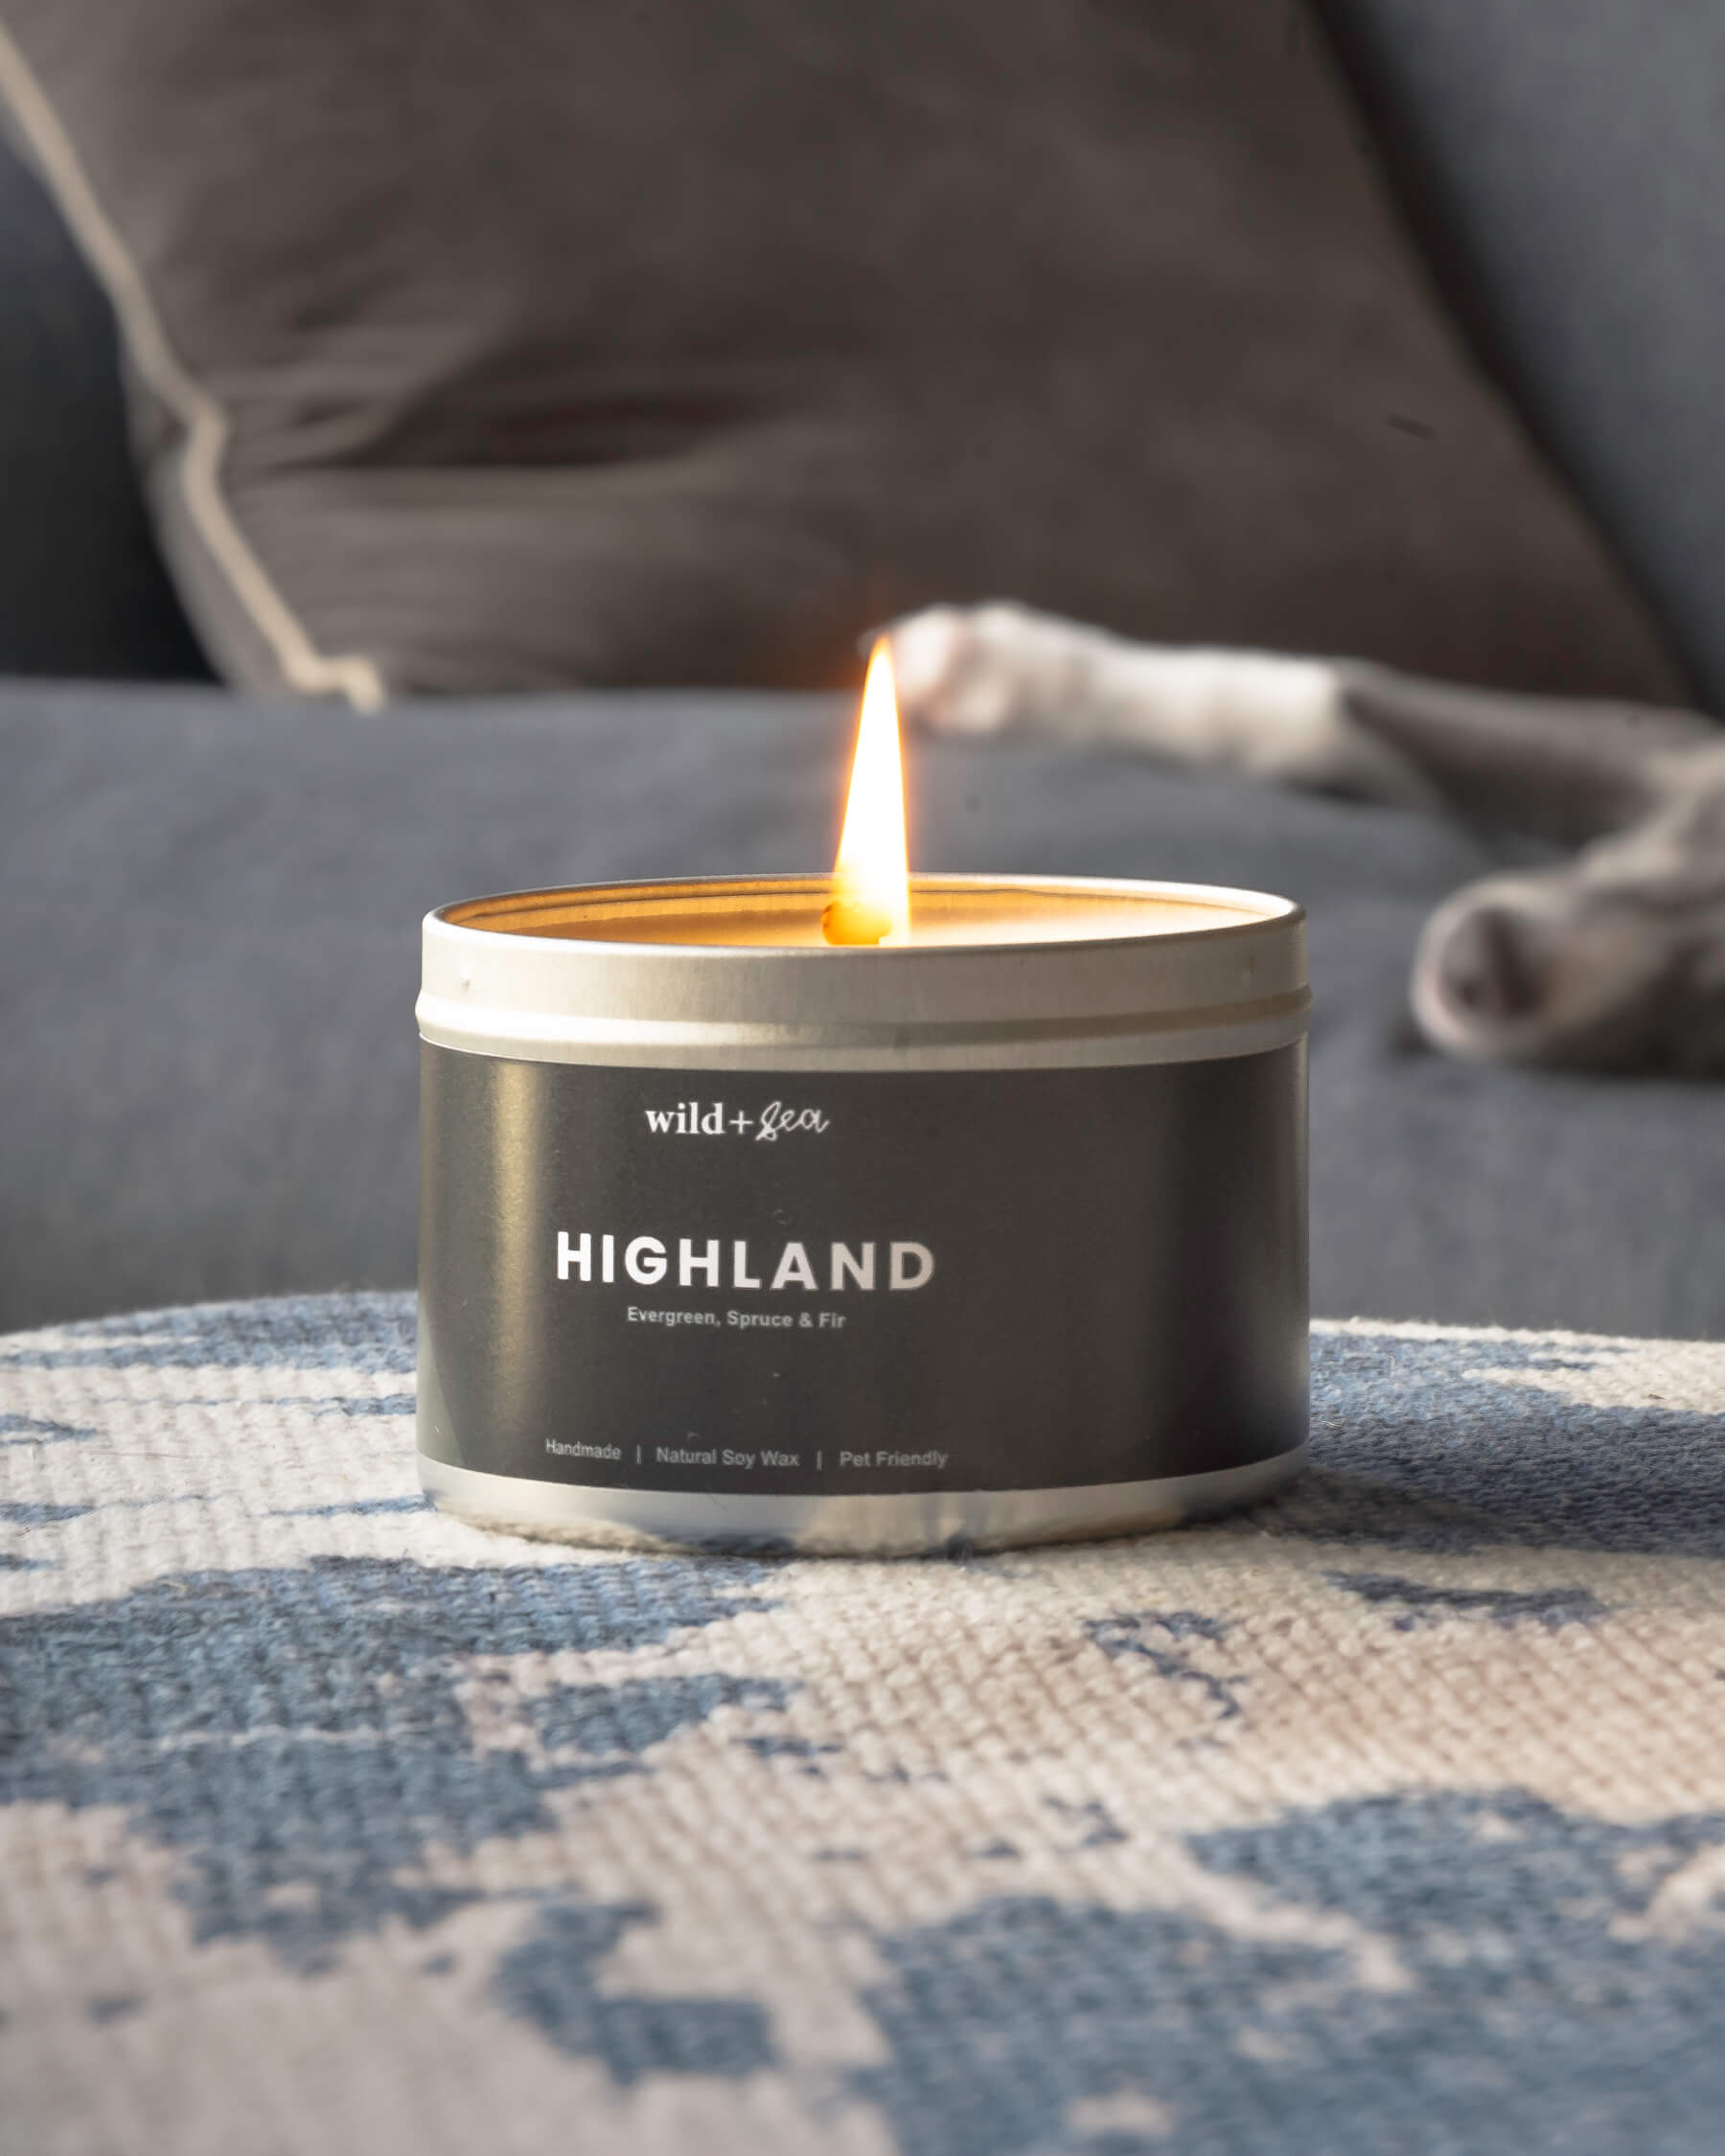 HIGHLAND | Evergreen, Spruce & Fir | Soy Wax Pet Friendly Candle